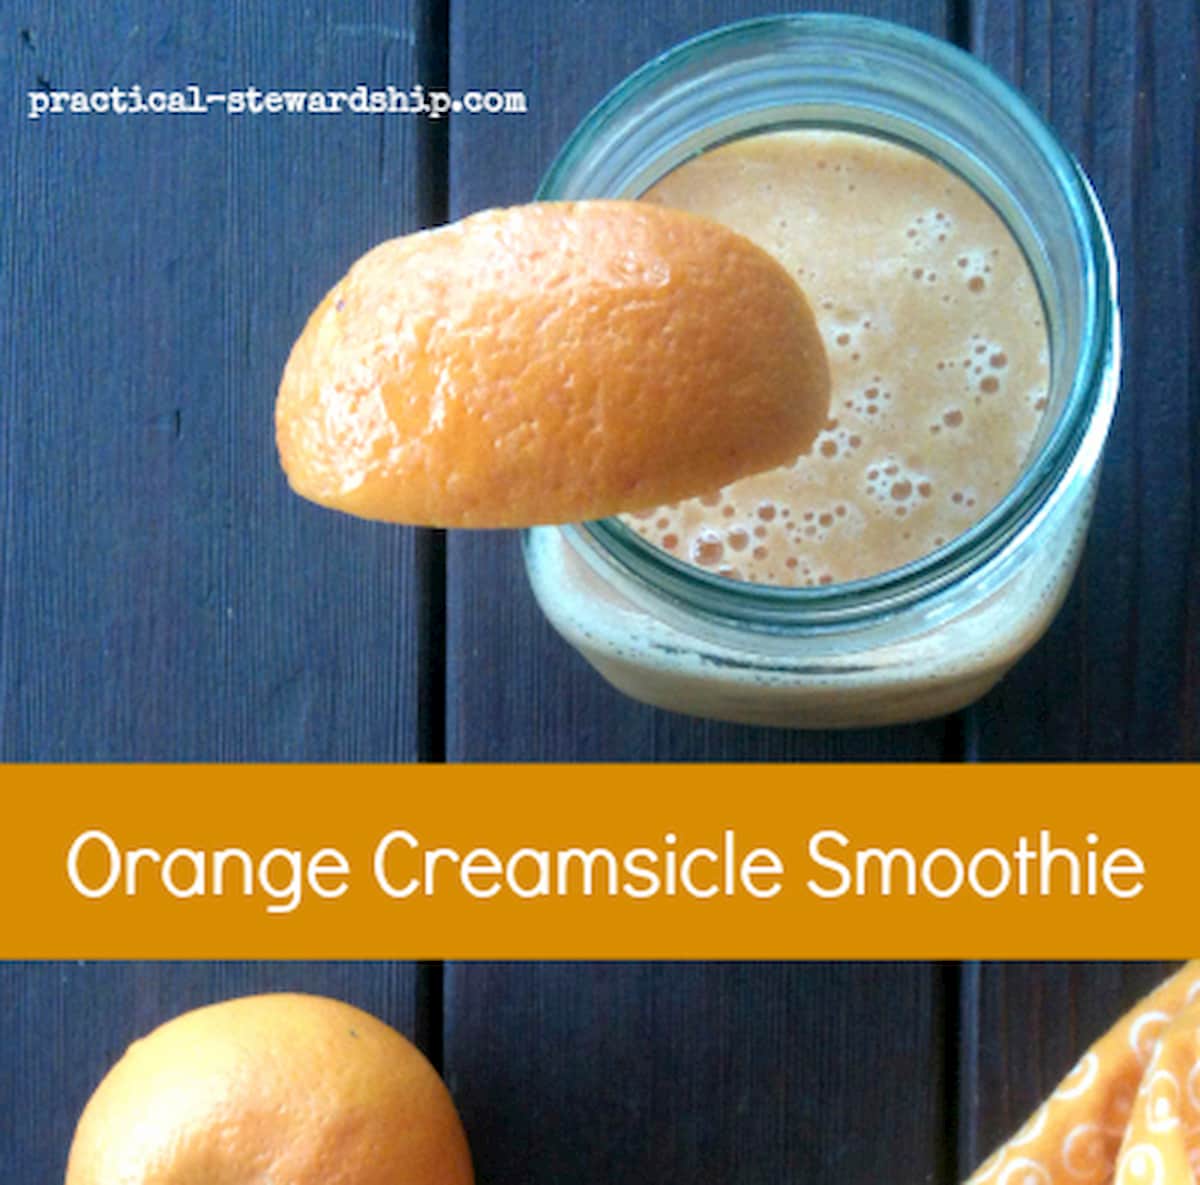 Orange Creamsicle Smoothie recipe tastes just like the childhood favorite orange creamsicle ice cream but healthier.